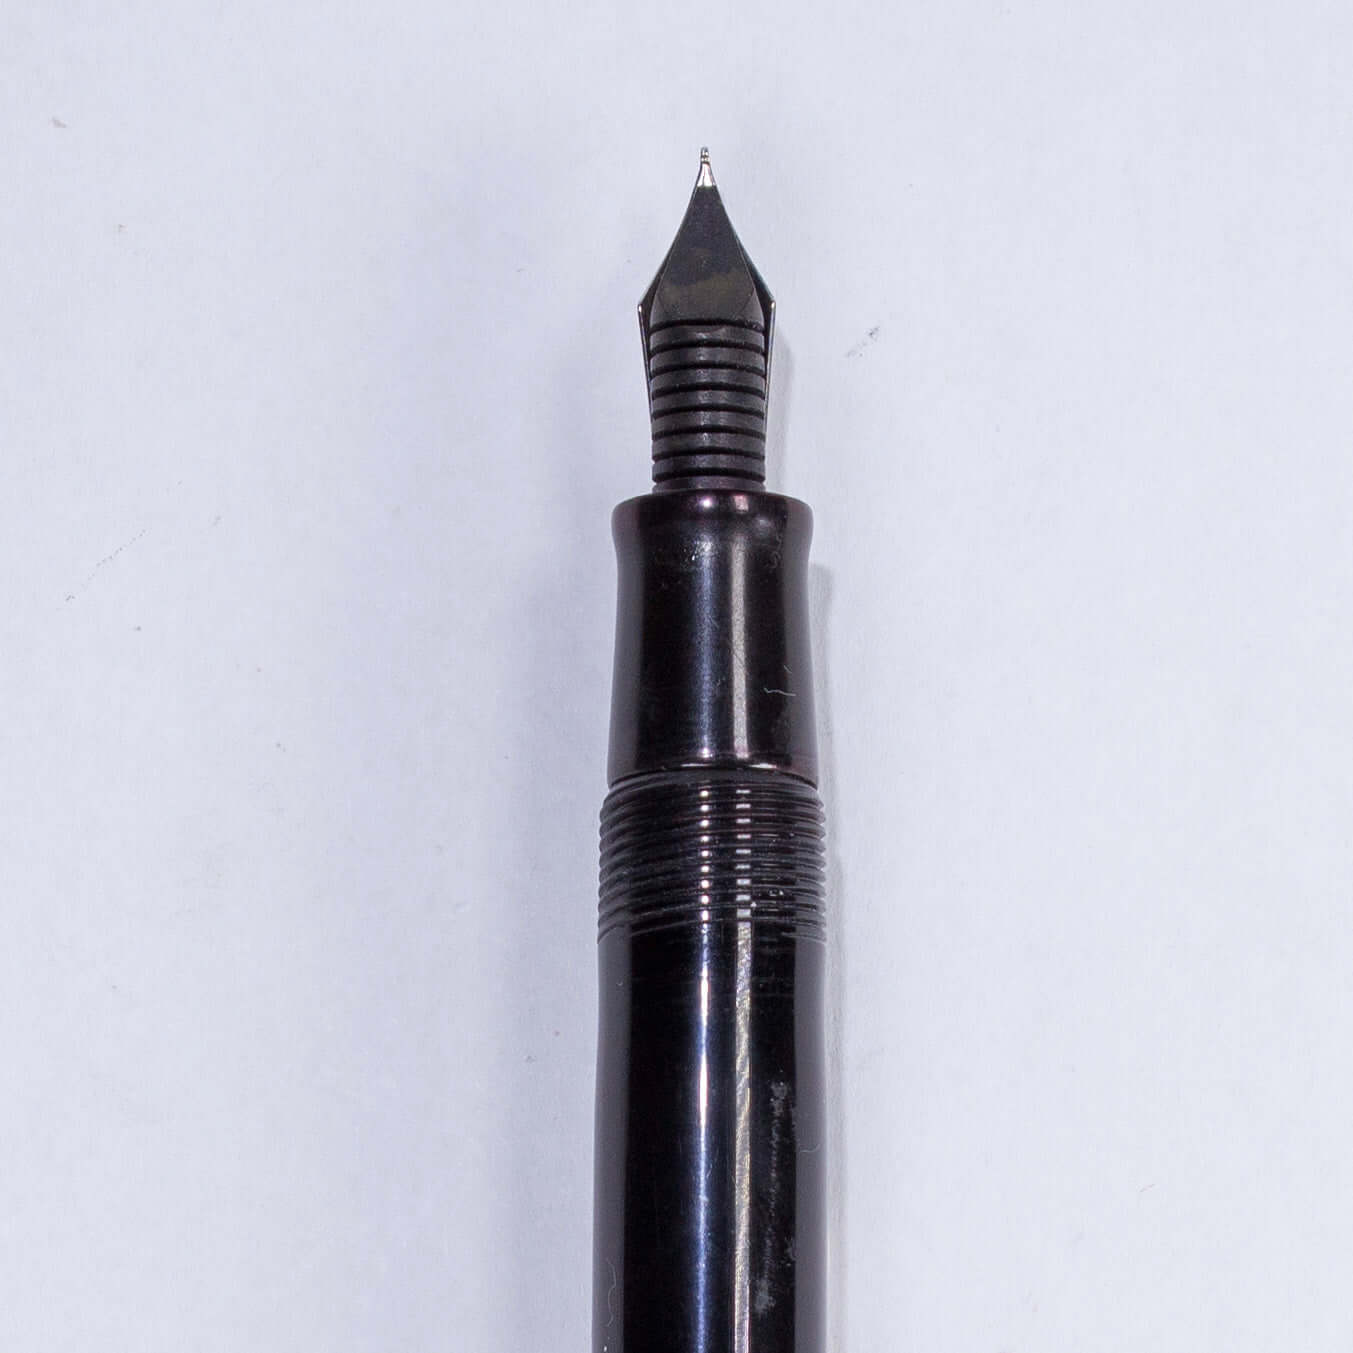 Esterbrook Model SJ Fountain Pen, Black, Restored Lever Filler, #1555 Firm Fine Gregg nib, Double Jewel